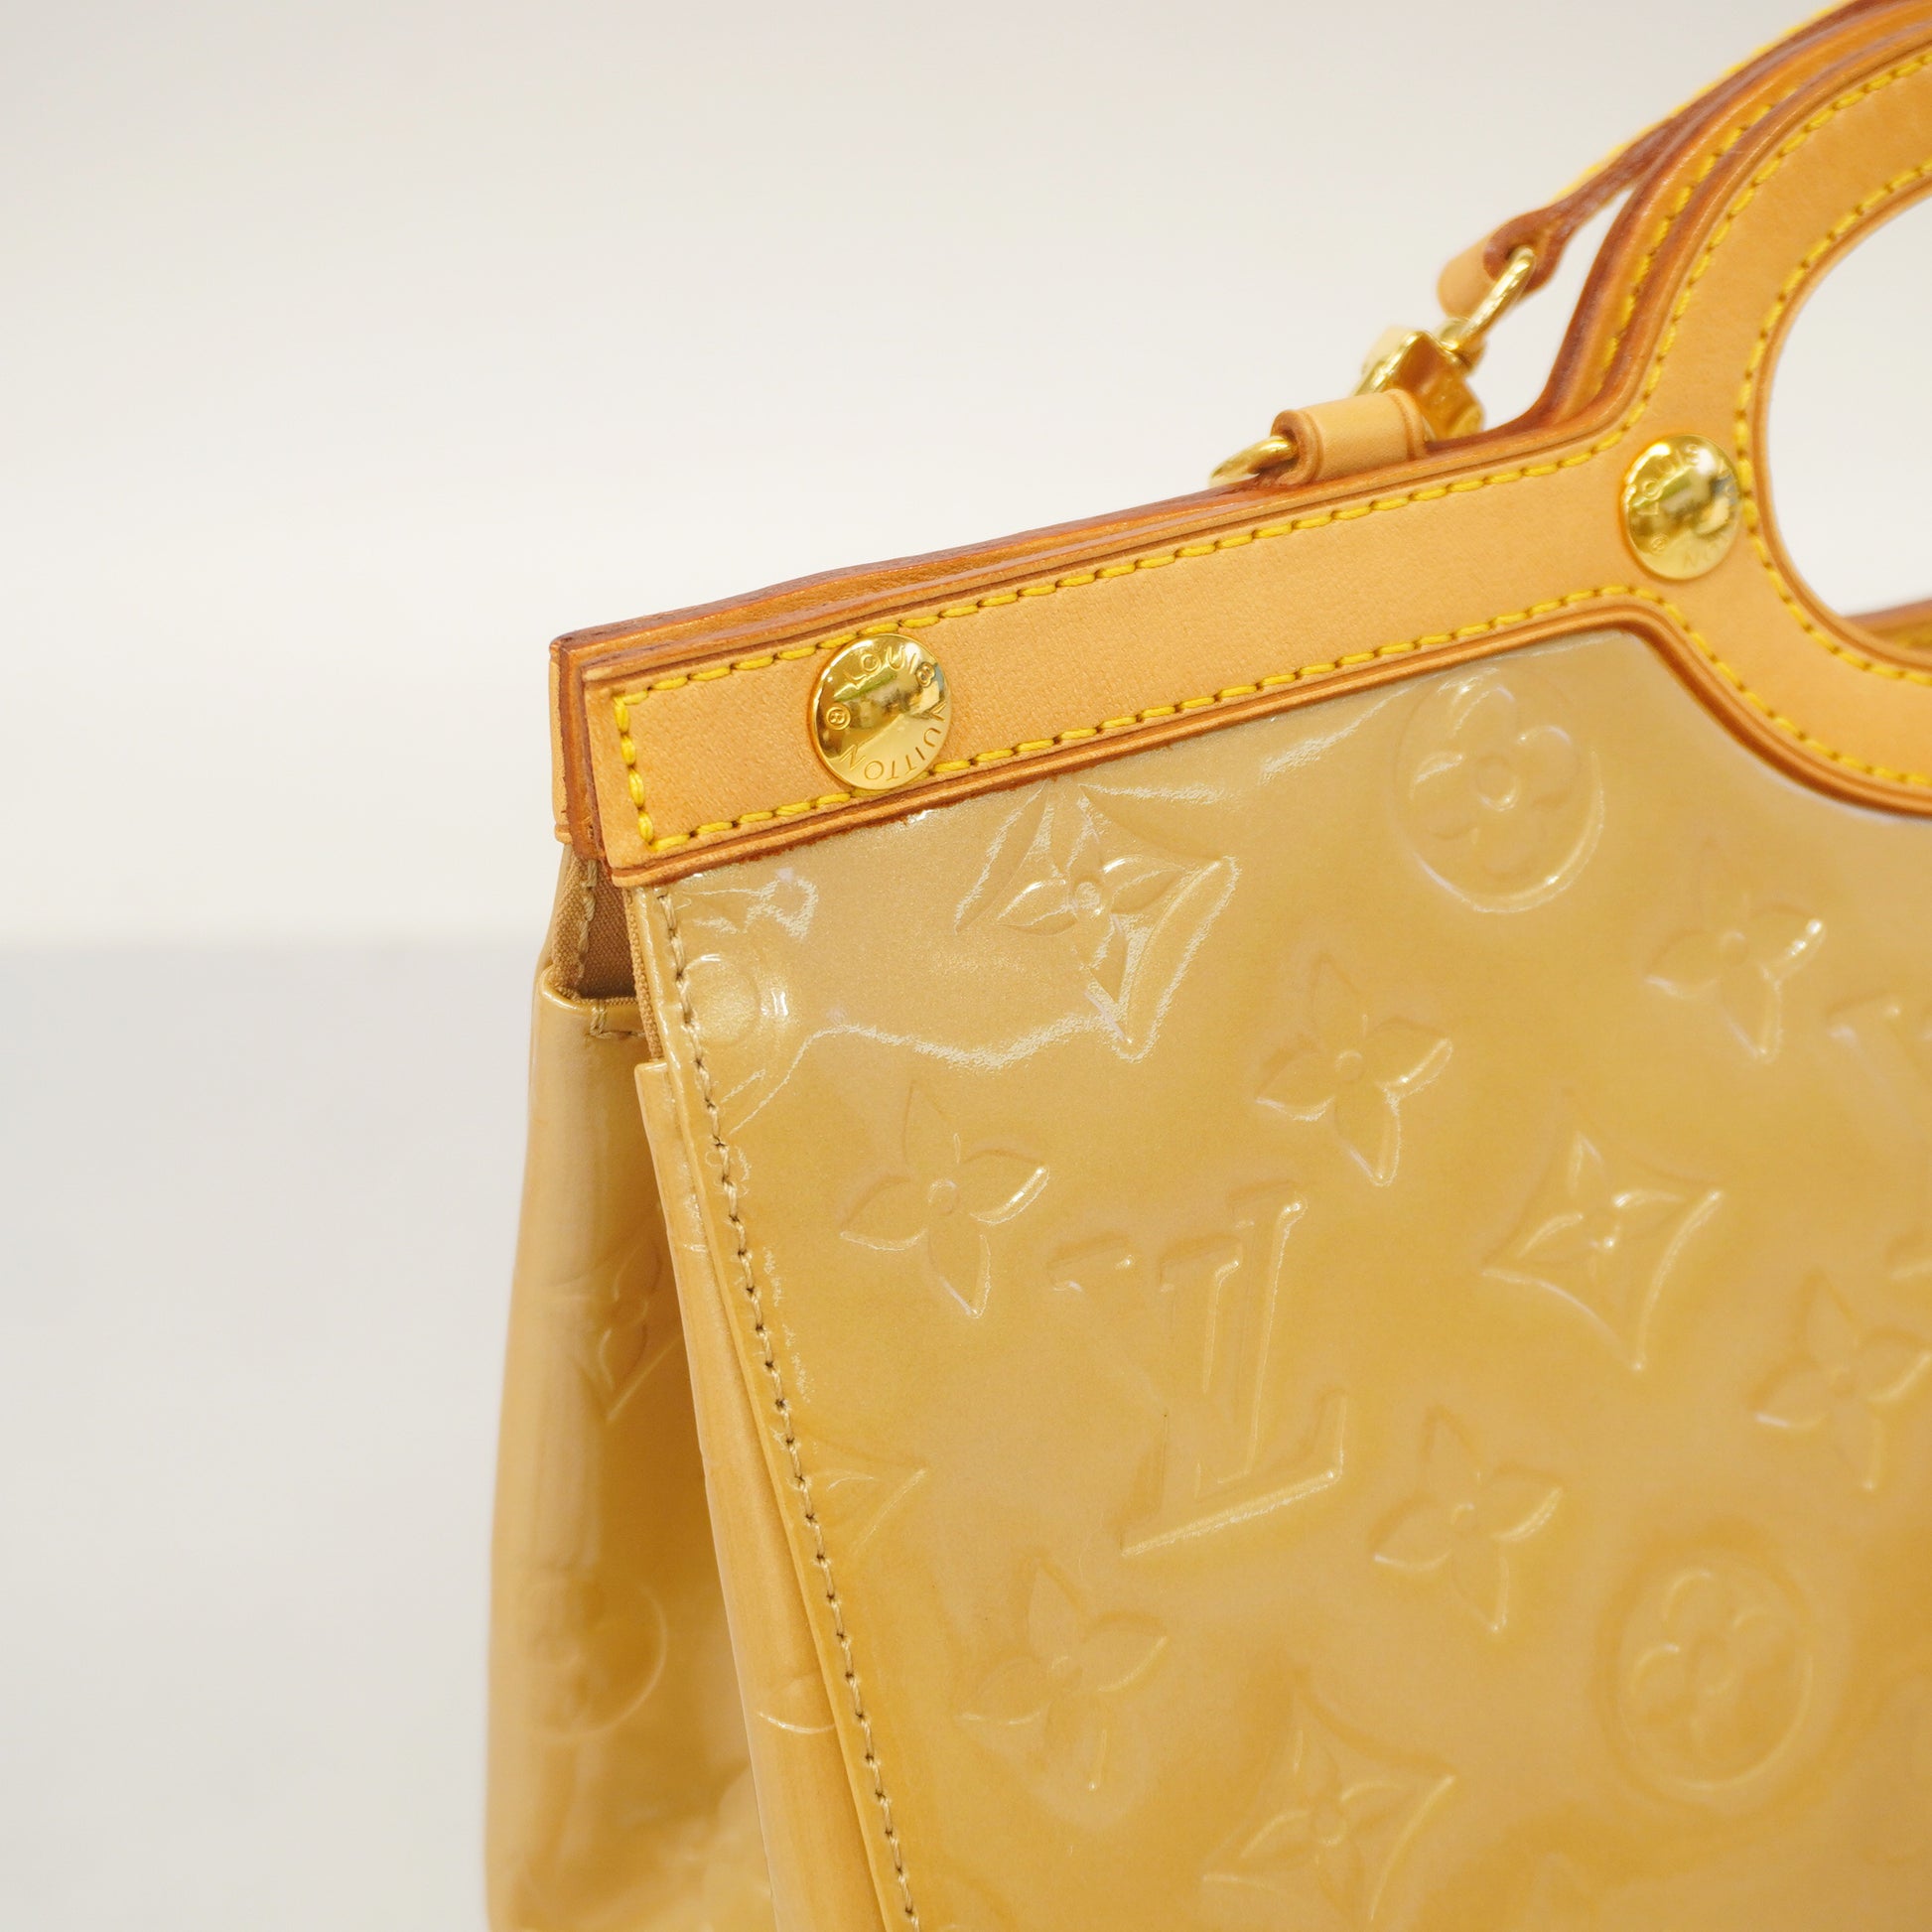 LOUIS VUITTON Handbag M91372 Roxbury Drive Monogram Vernis beige